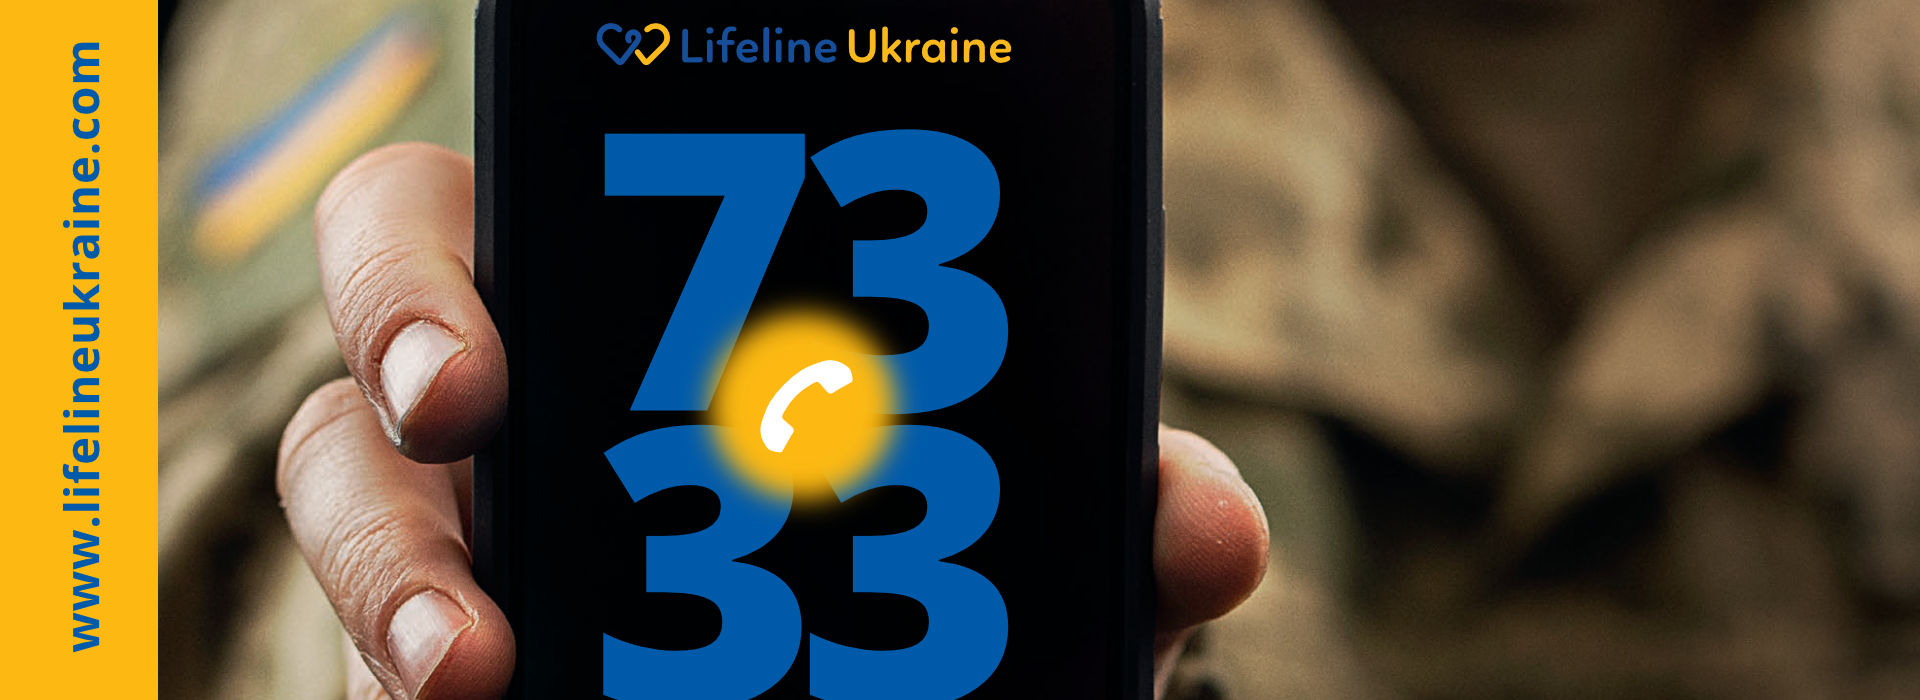 Lifeline Ukraine Team Calls for Partnership